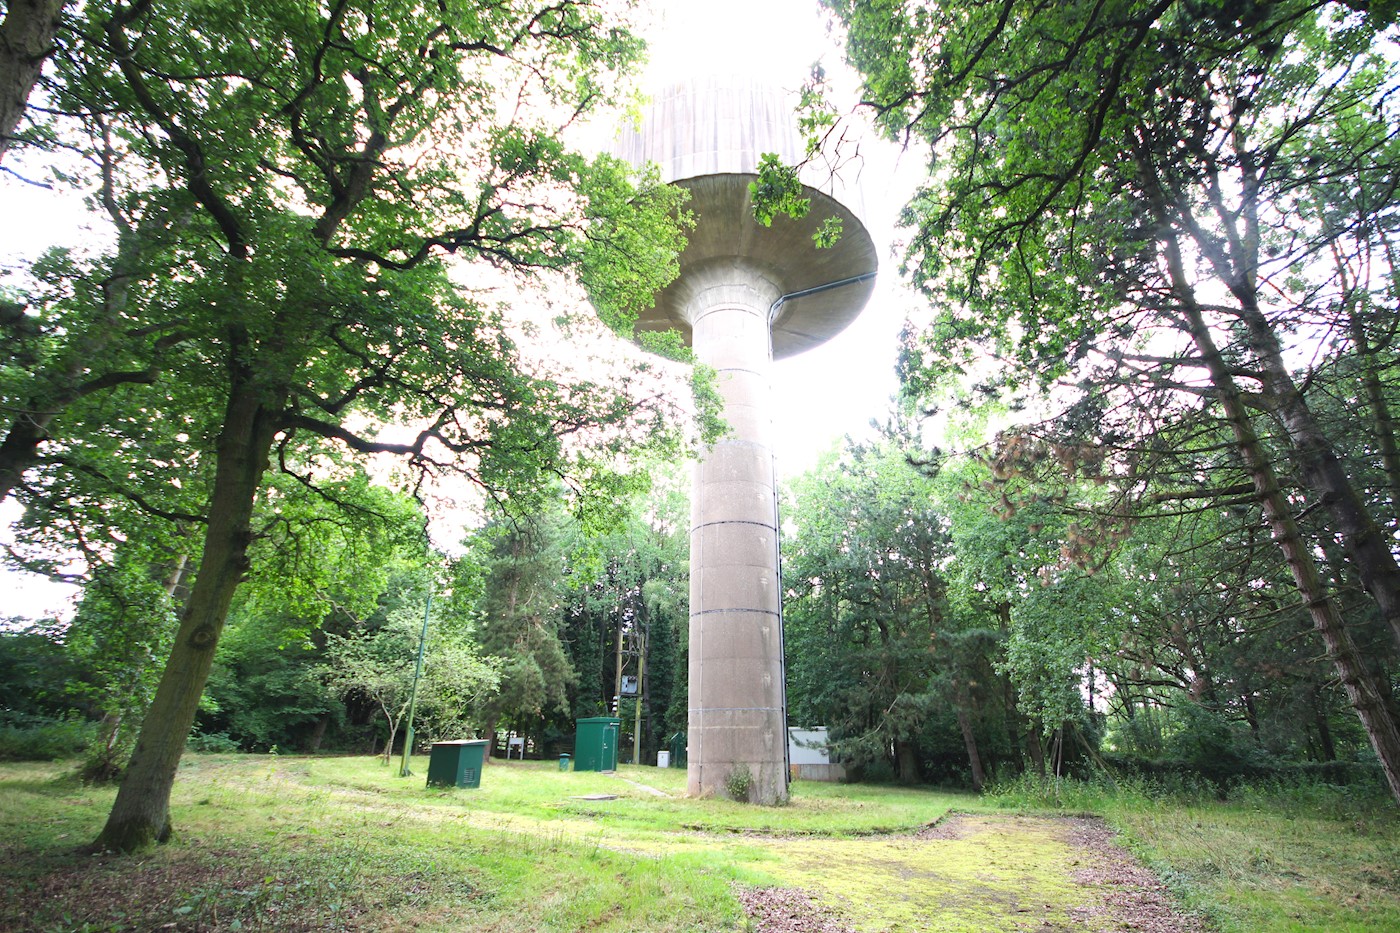 Bishops Wood Water Tower, off Bishops Wood Lane, Stourport on Severn, DY13 9SE 1/7